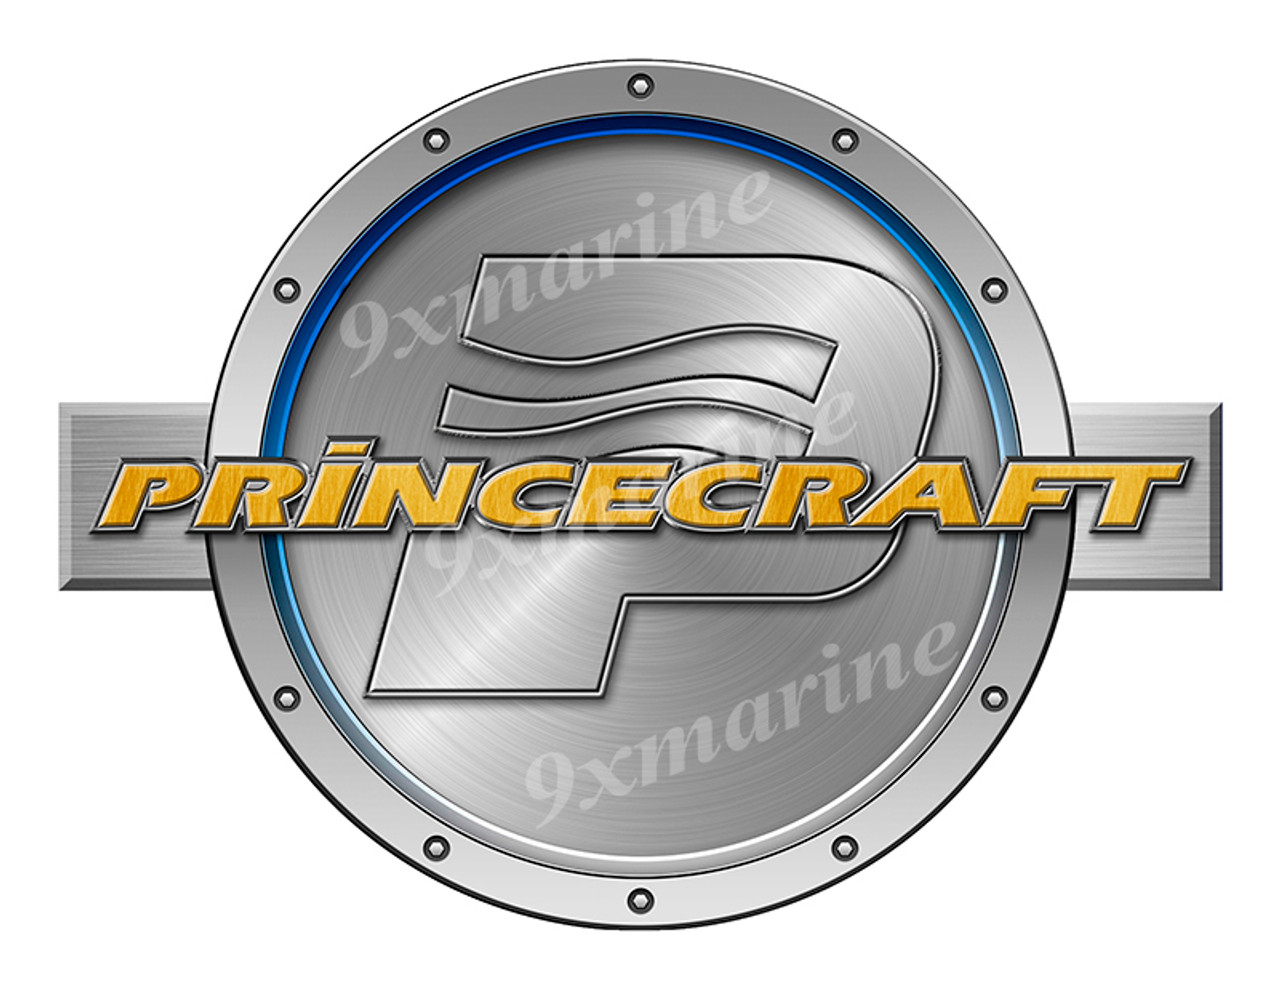 One Princecraft Remastered Sticker. Brushed Metal Style - 7.5" diameter